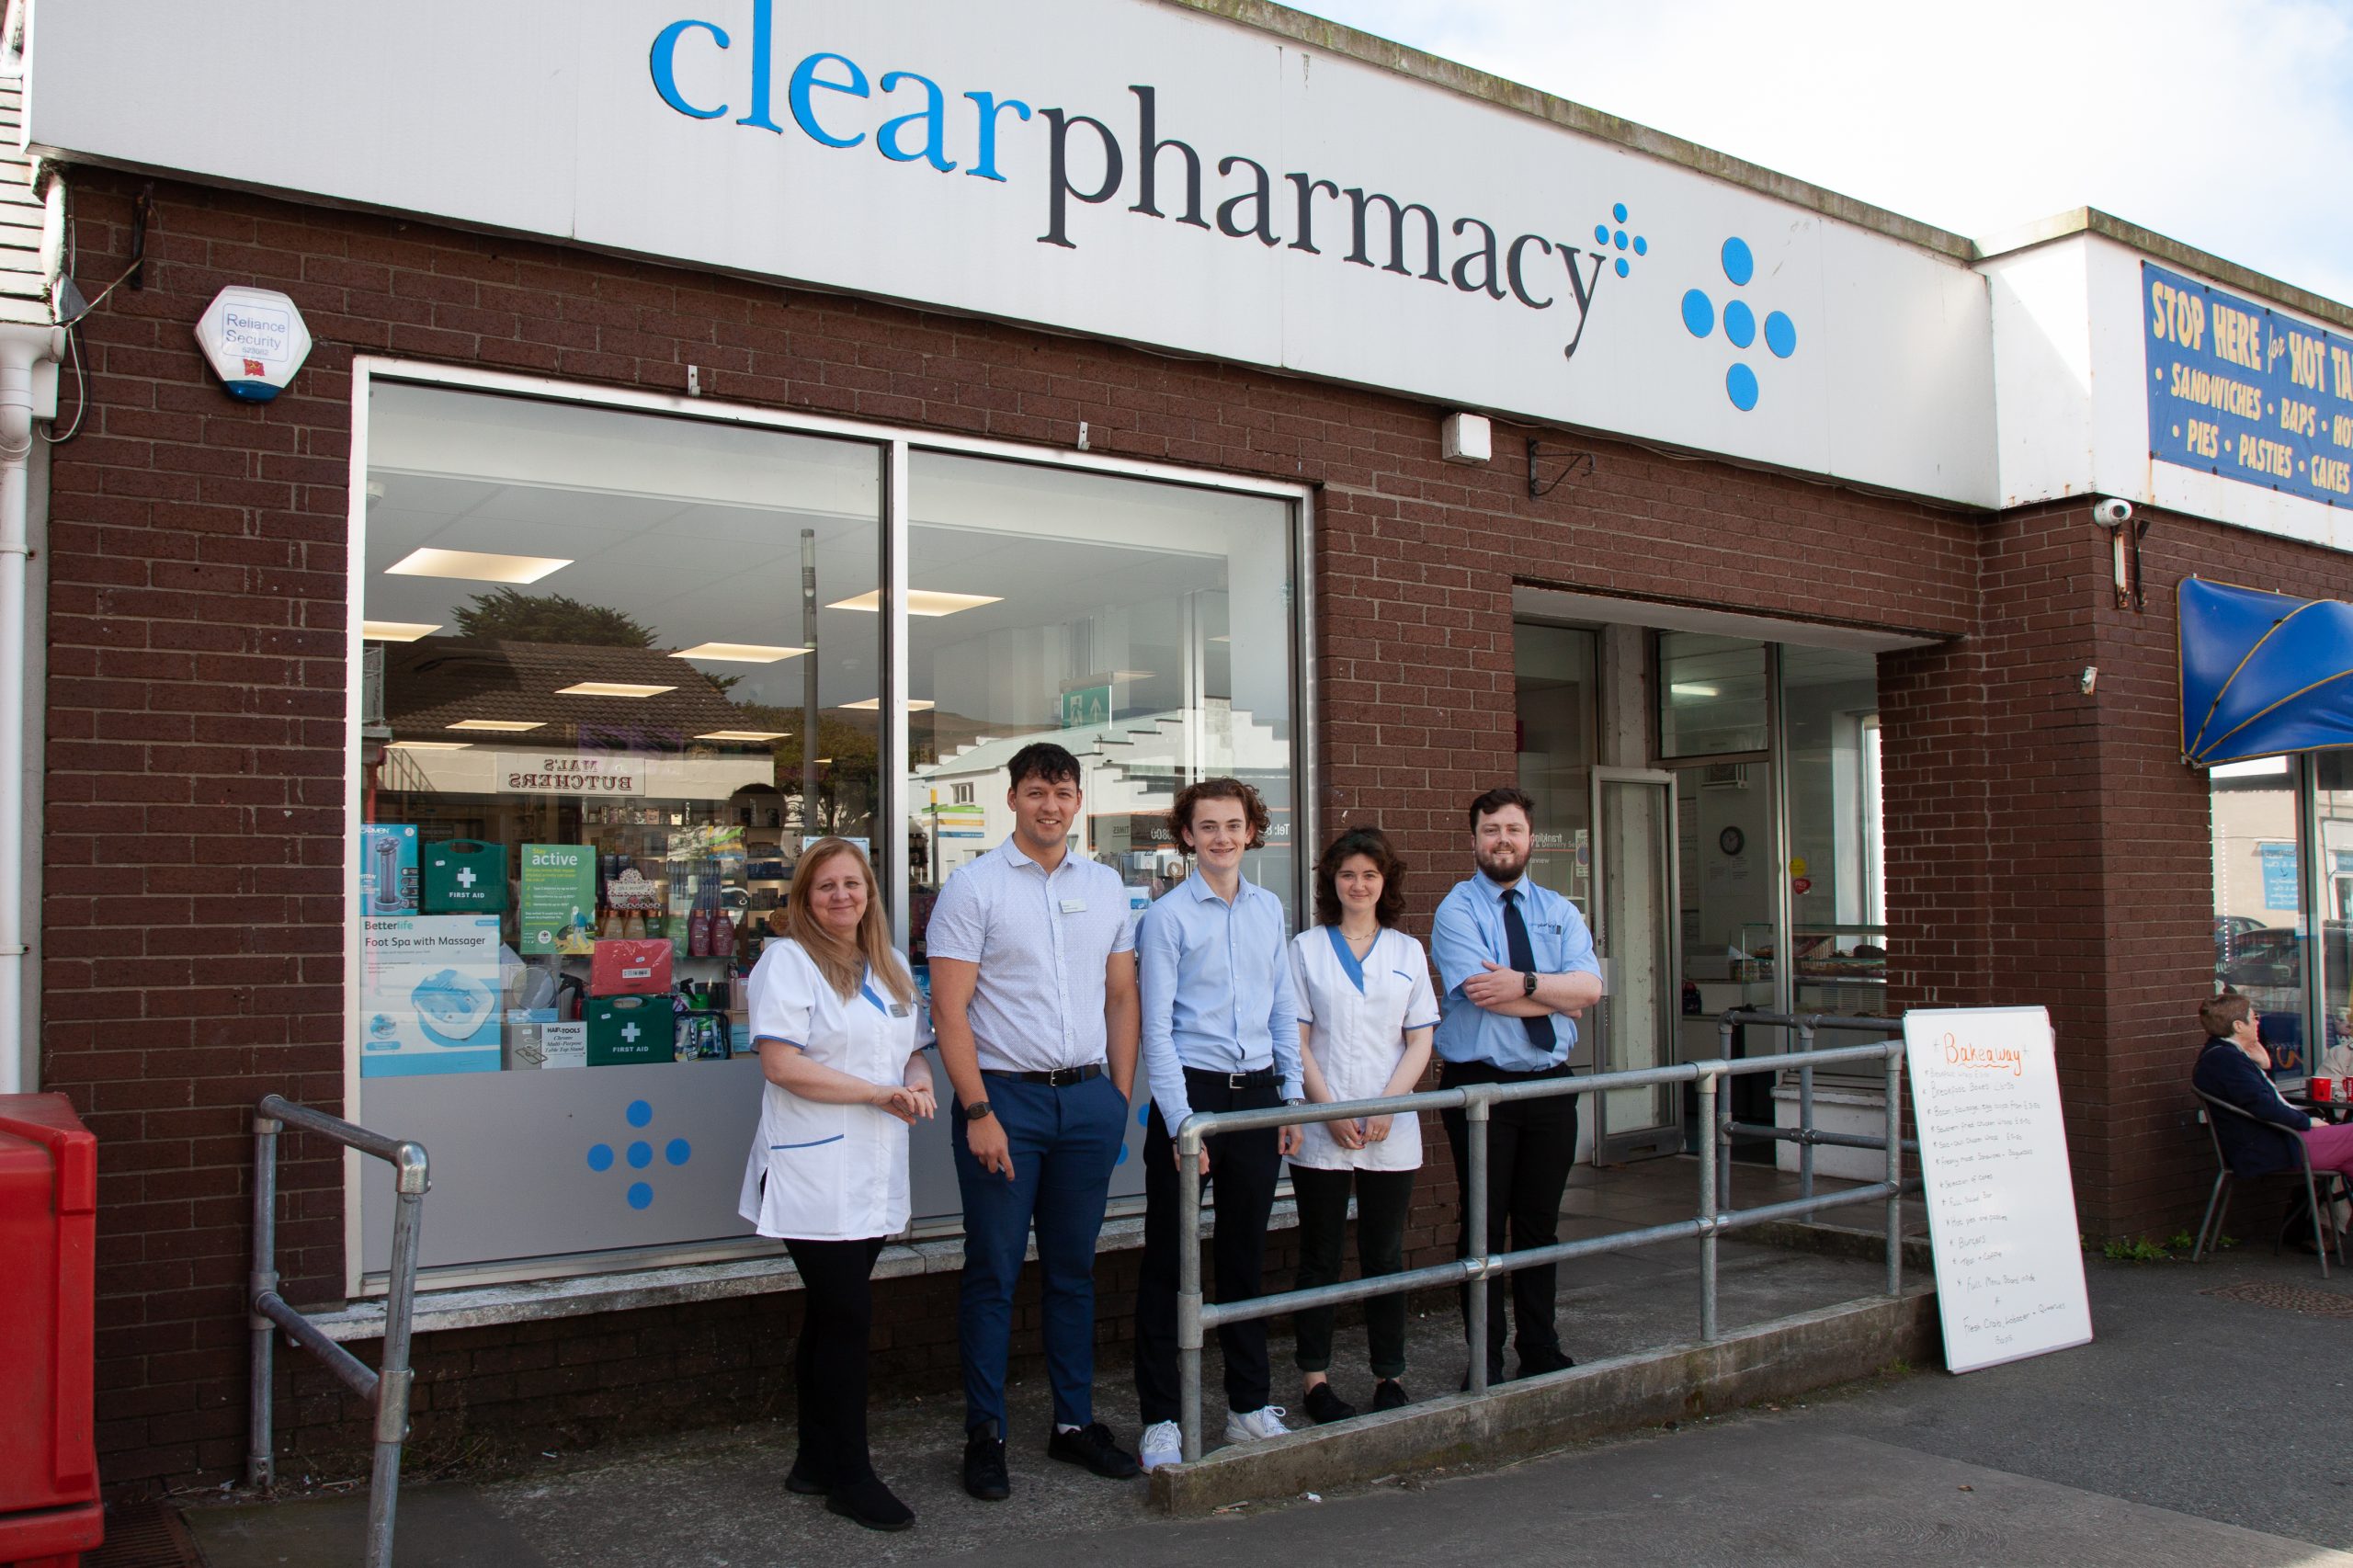 Clear Pharmacy, 8 Station Road, Port Erin IM9 6AB